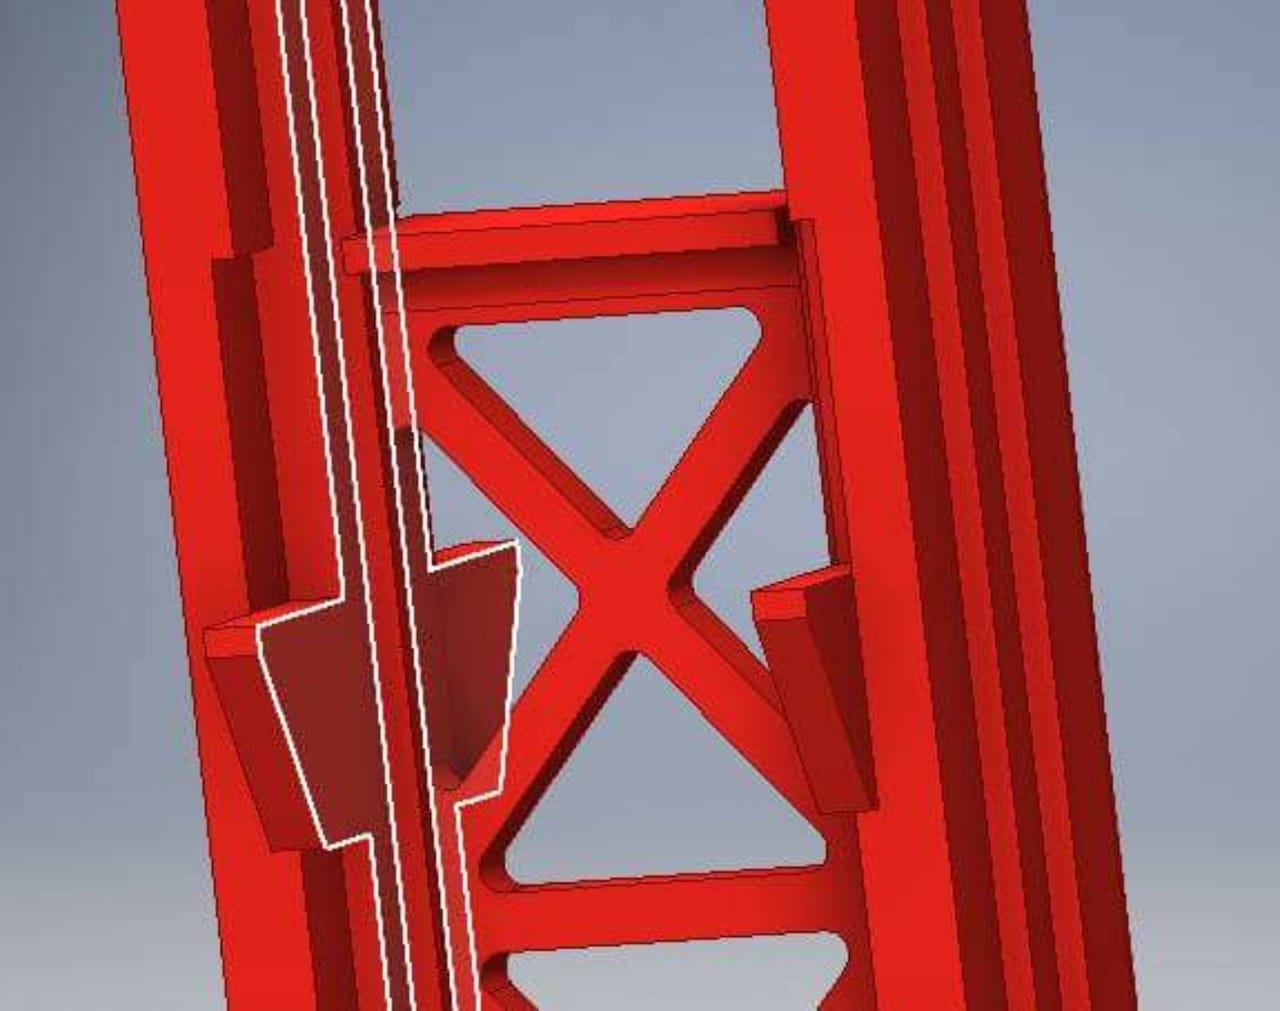  Designing the Golden Gate Bridge 3D model using Autodesk Inventor 